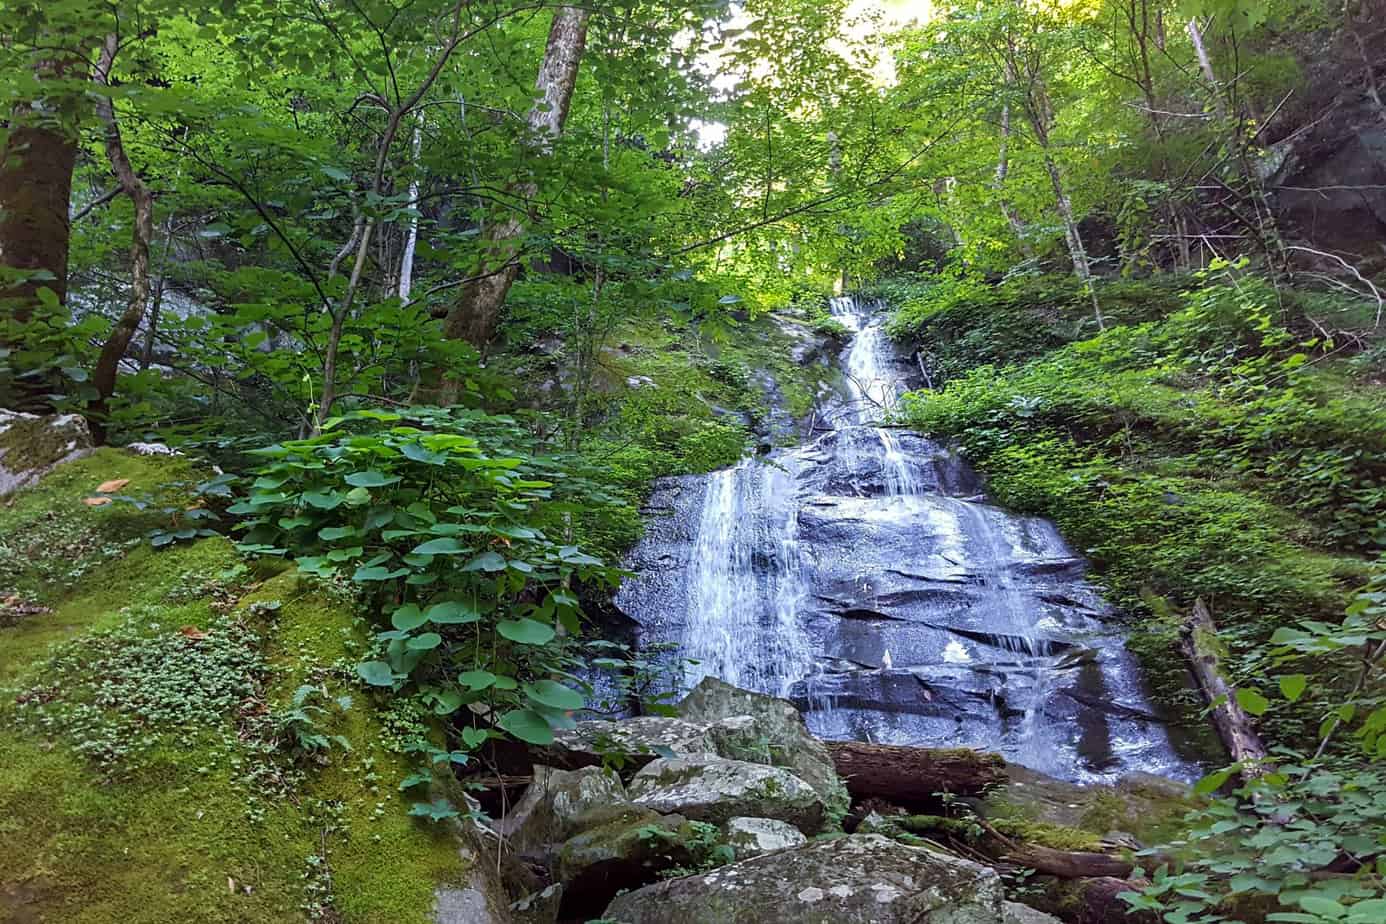 4. Porters Creek Trail- Smoky Mountains National Park